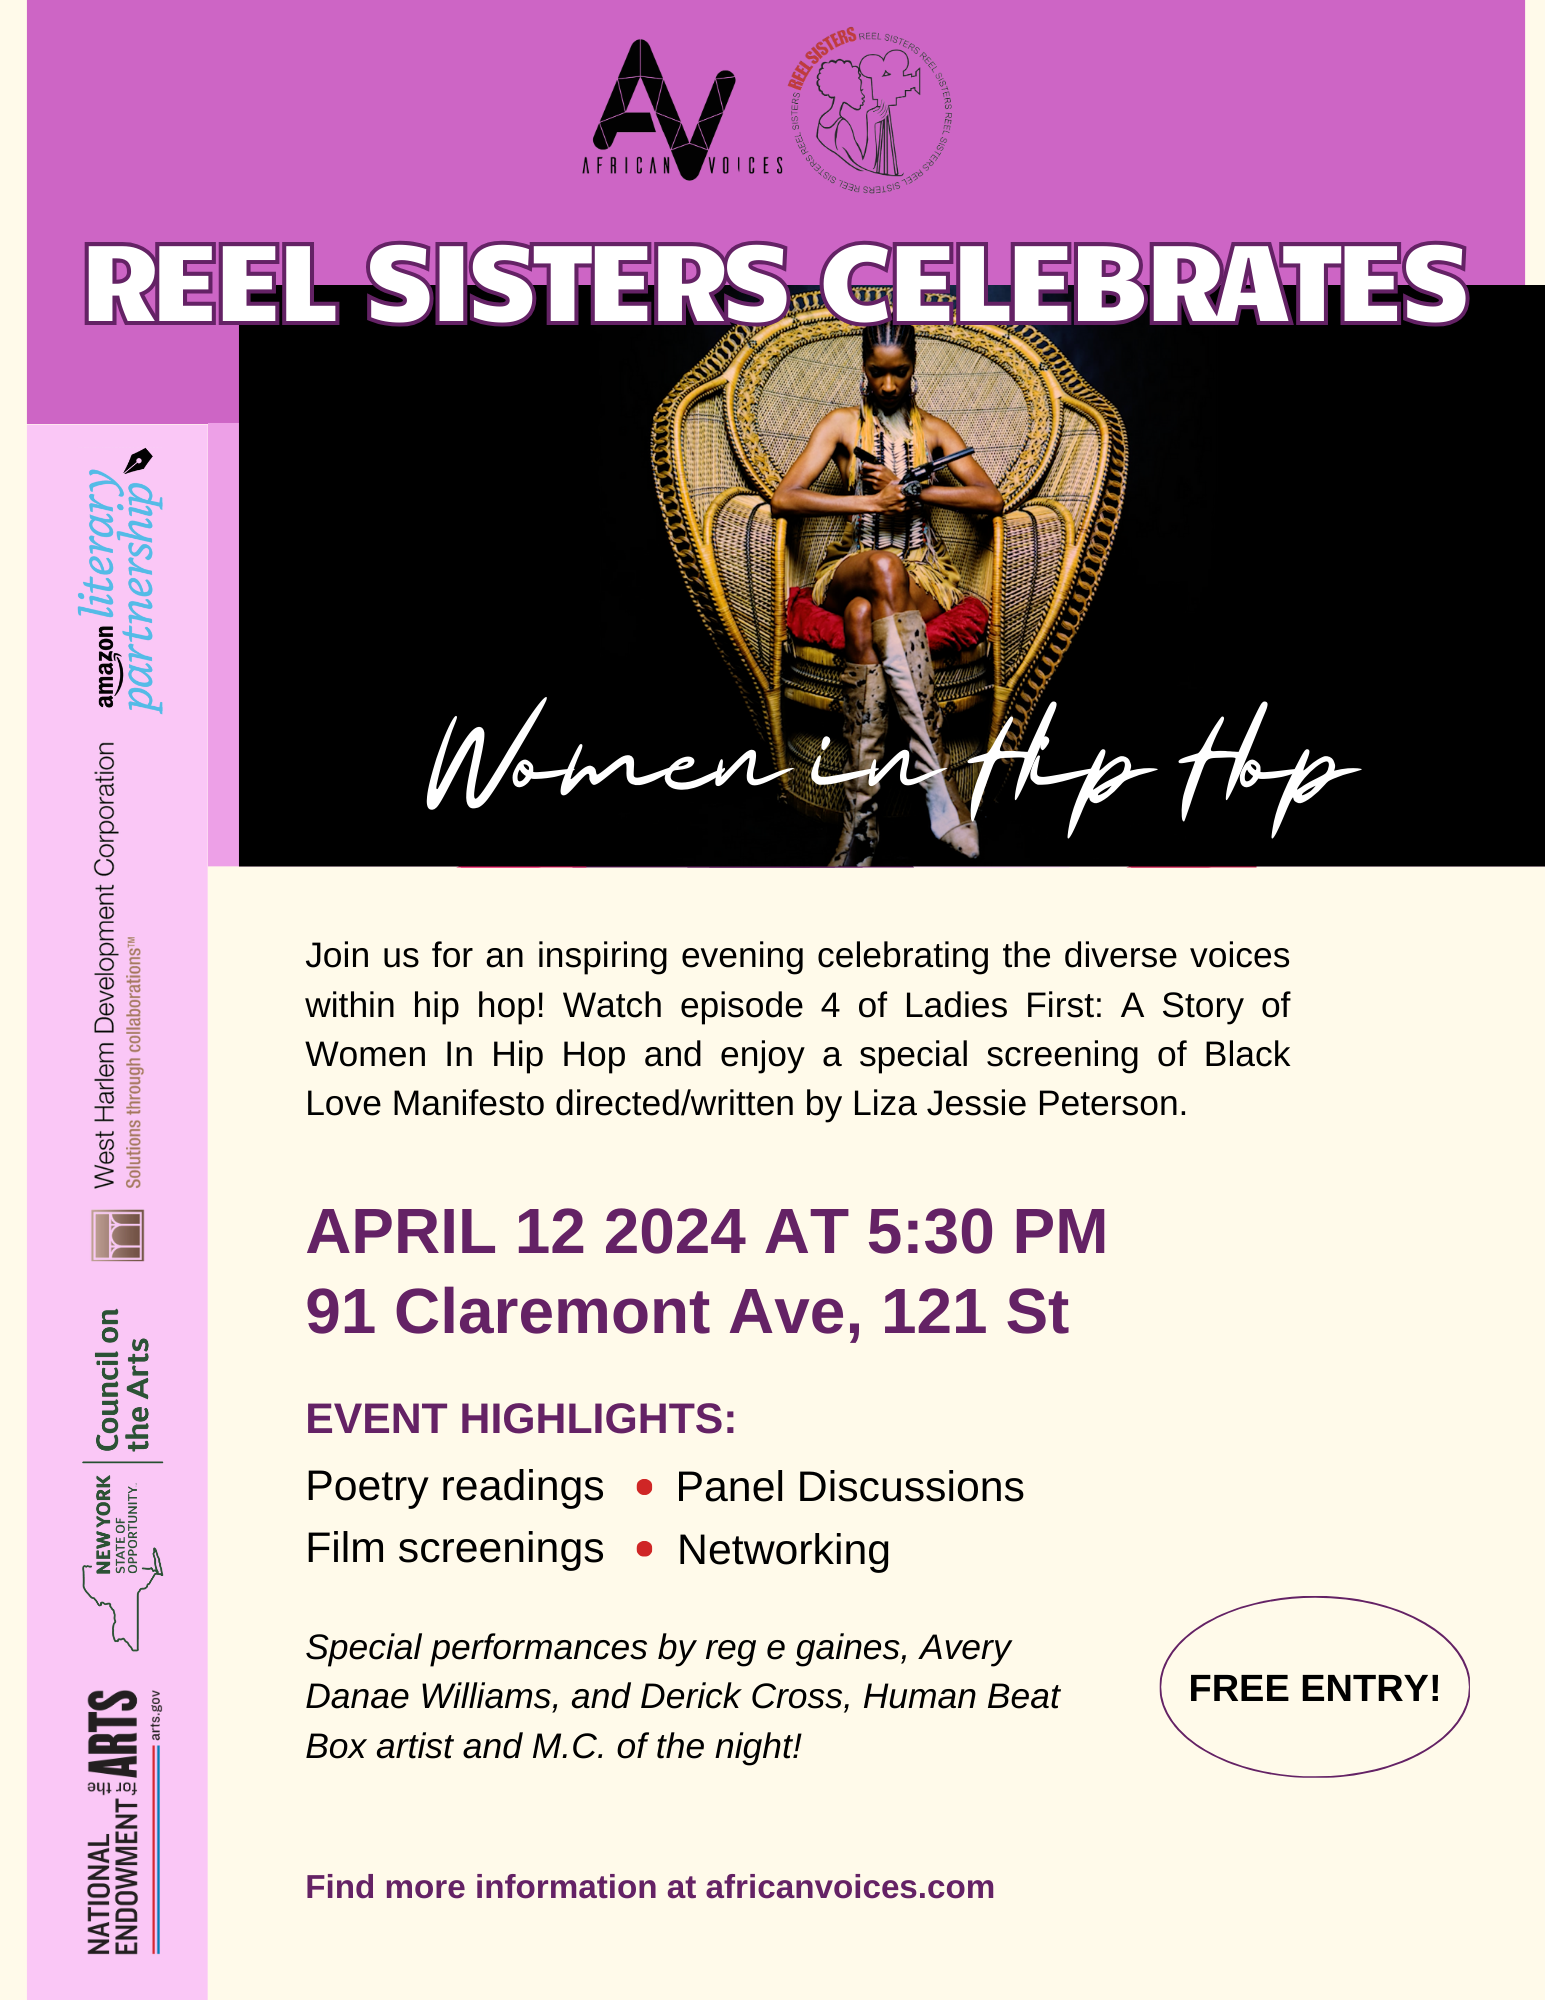 A Celebration of Women in Hip Hop